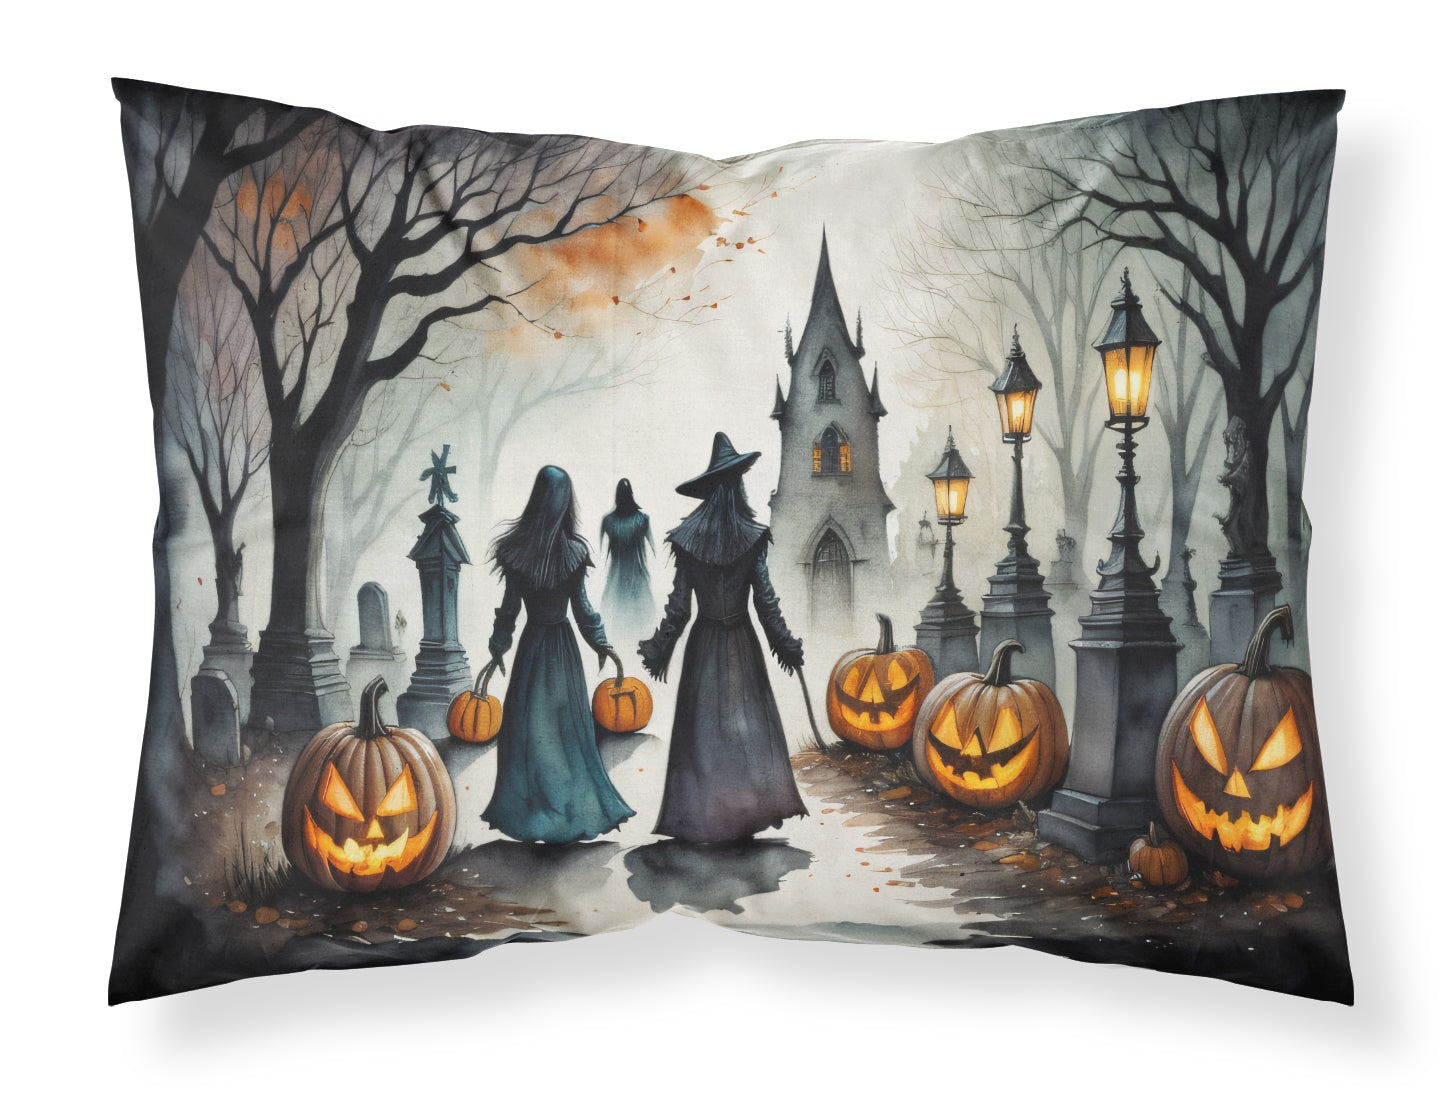 Buy this Vampires Spooky Halloween Fabric Standard Pillowcase